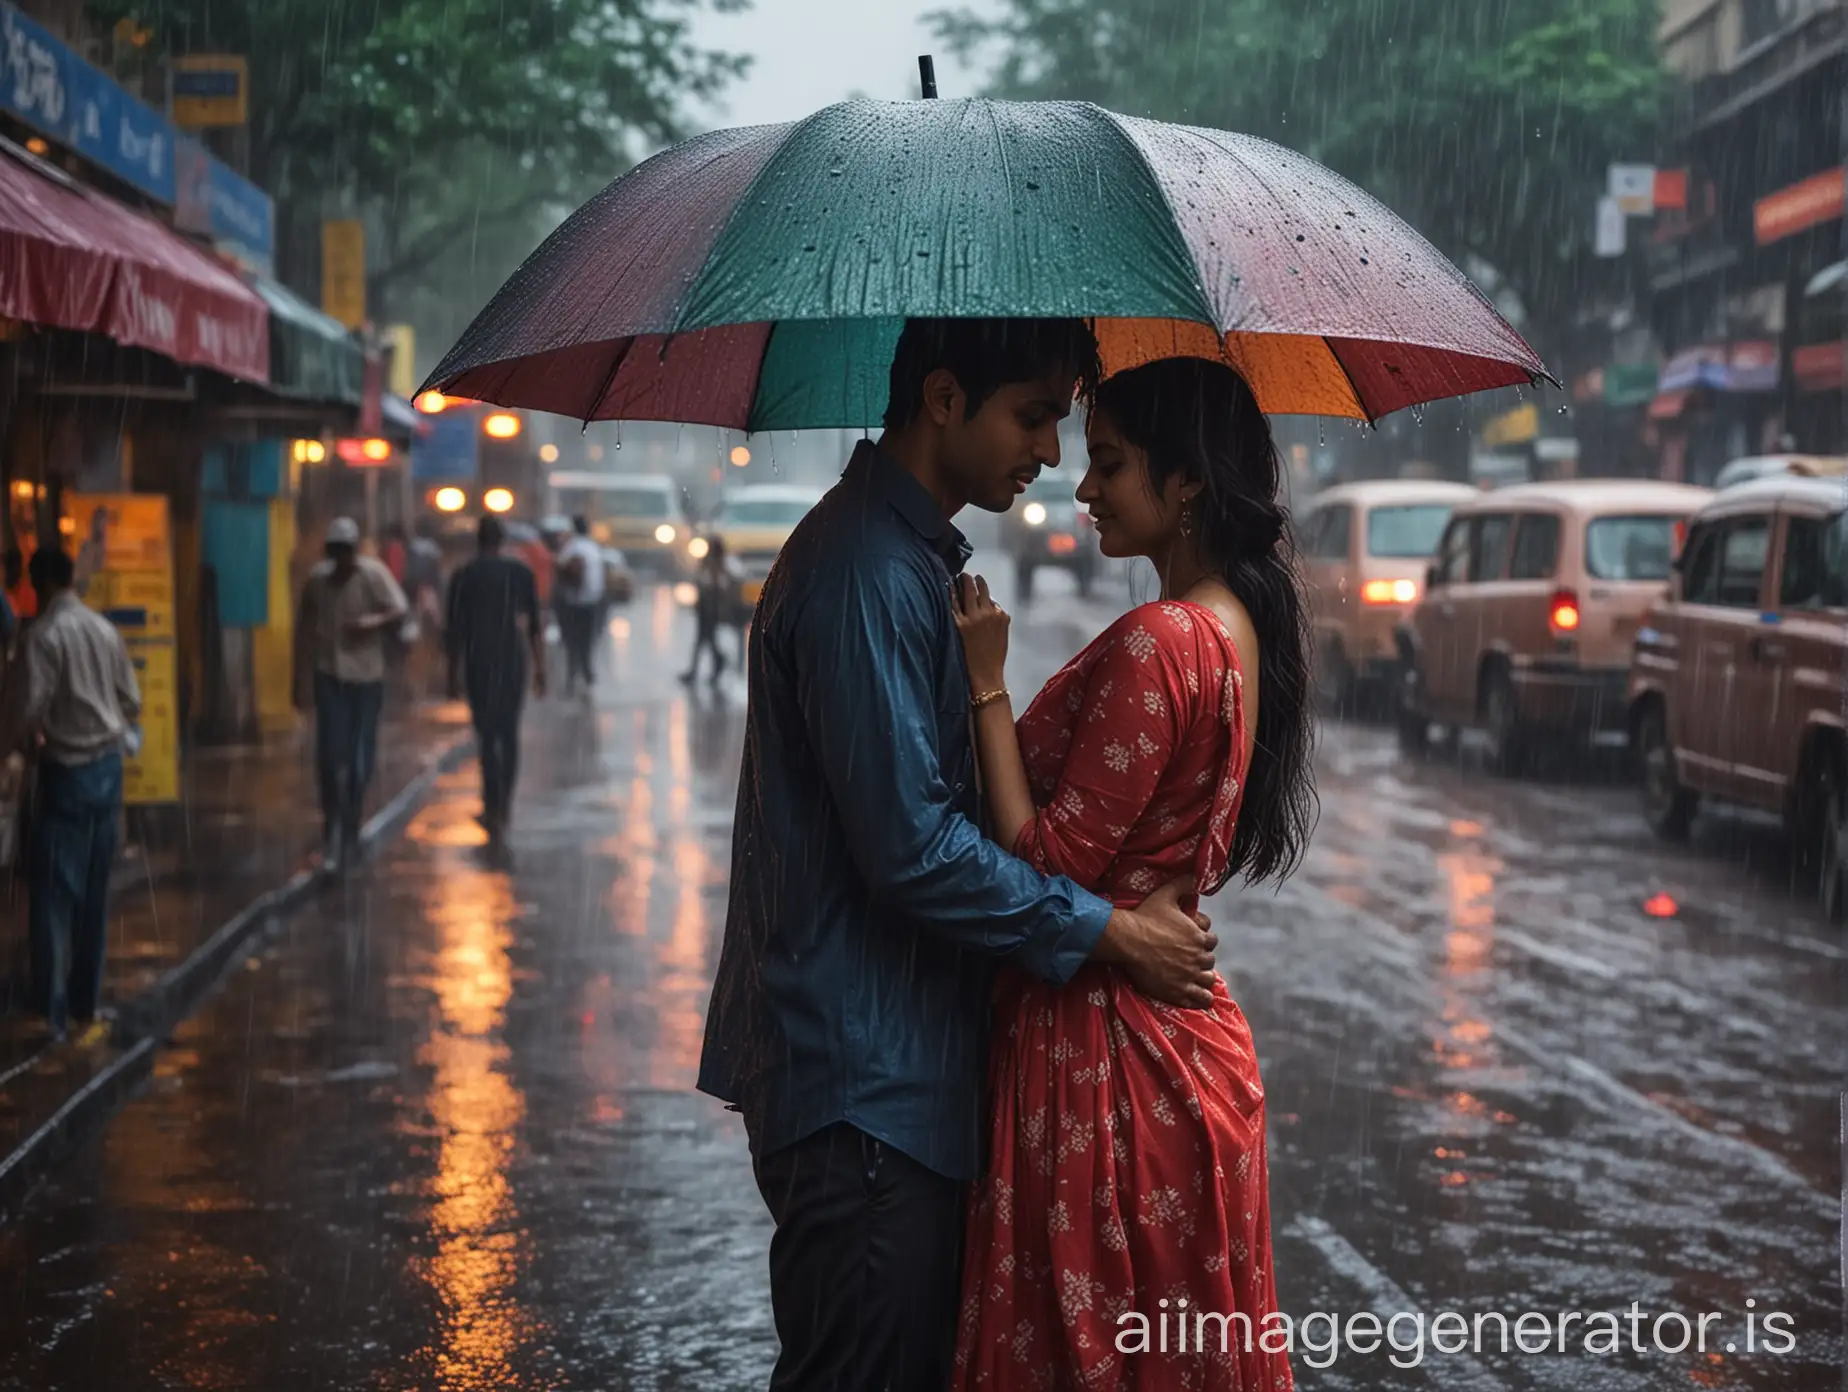 Romantic-Indian-Couple-Embracing-in-Monsoon-Rain-at-Mumbai-Intersection